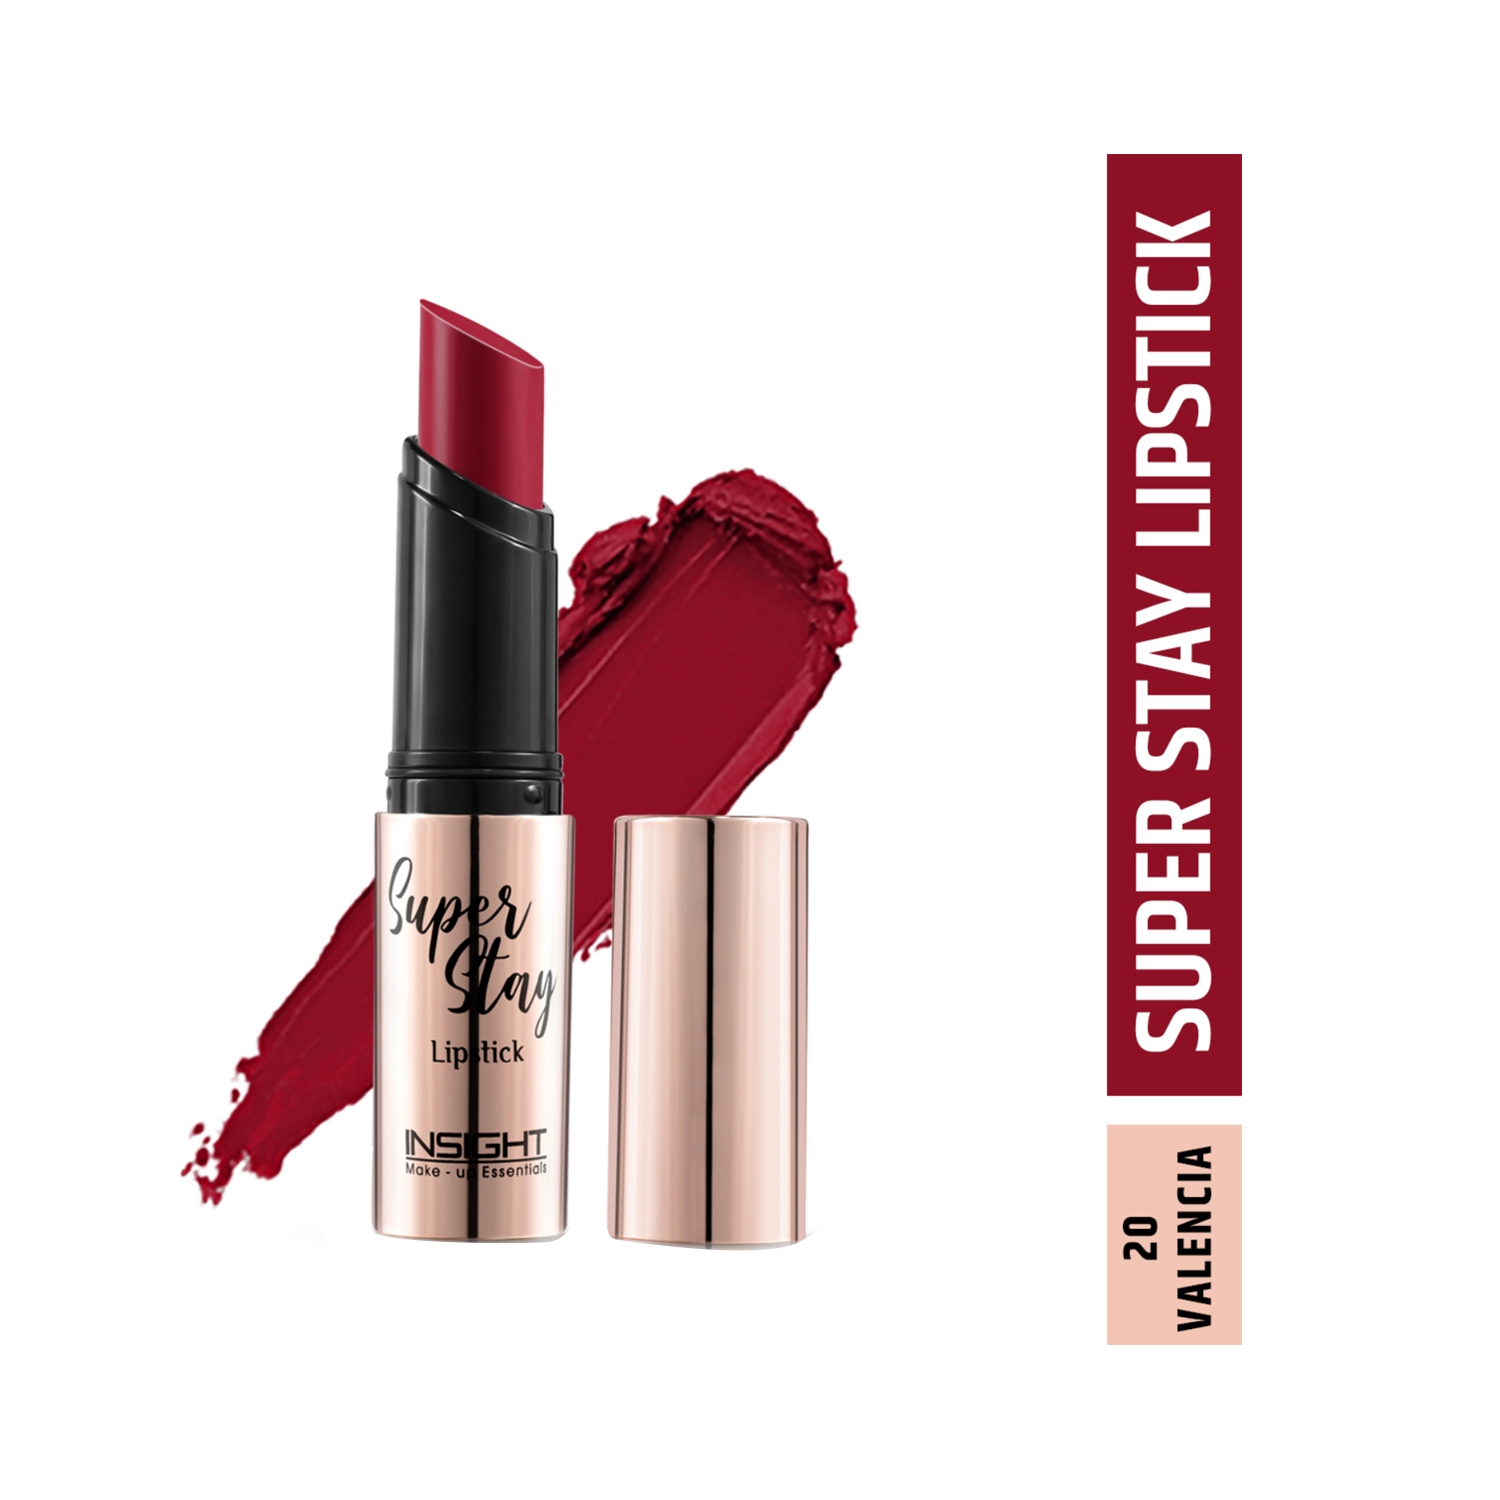 Insight Cosmetics | Insight Cosmetics Super Stay Lipstick - 20 Valencia (7g)